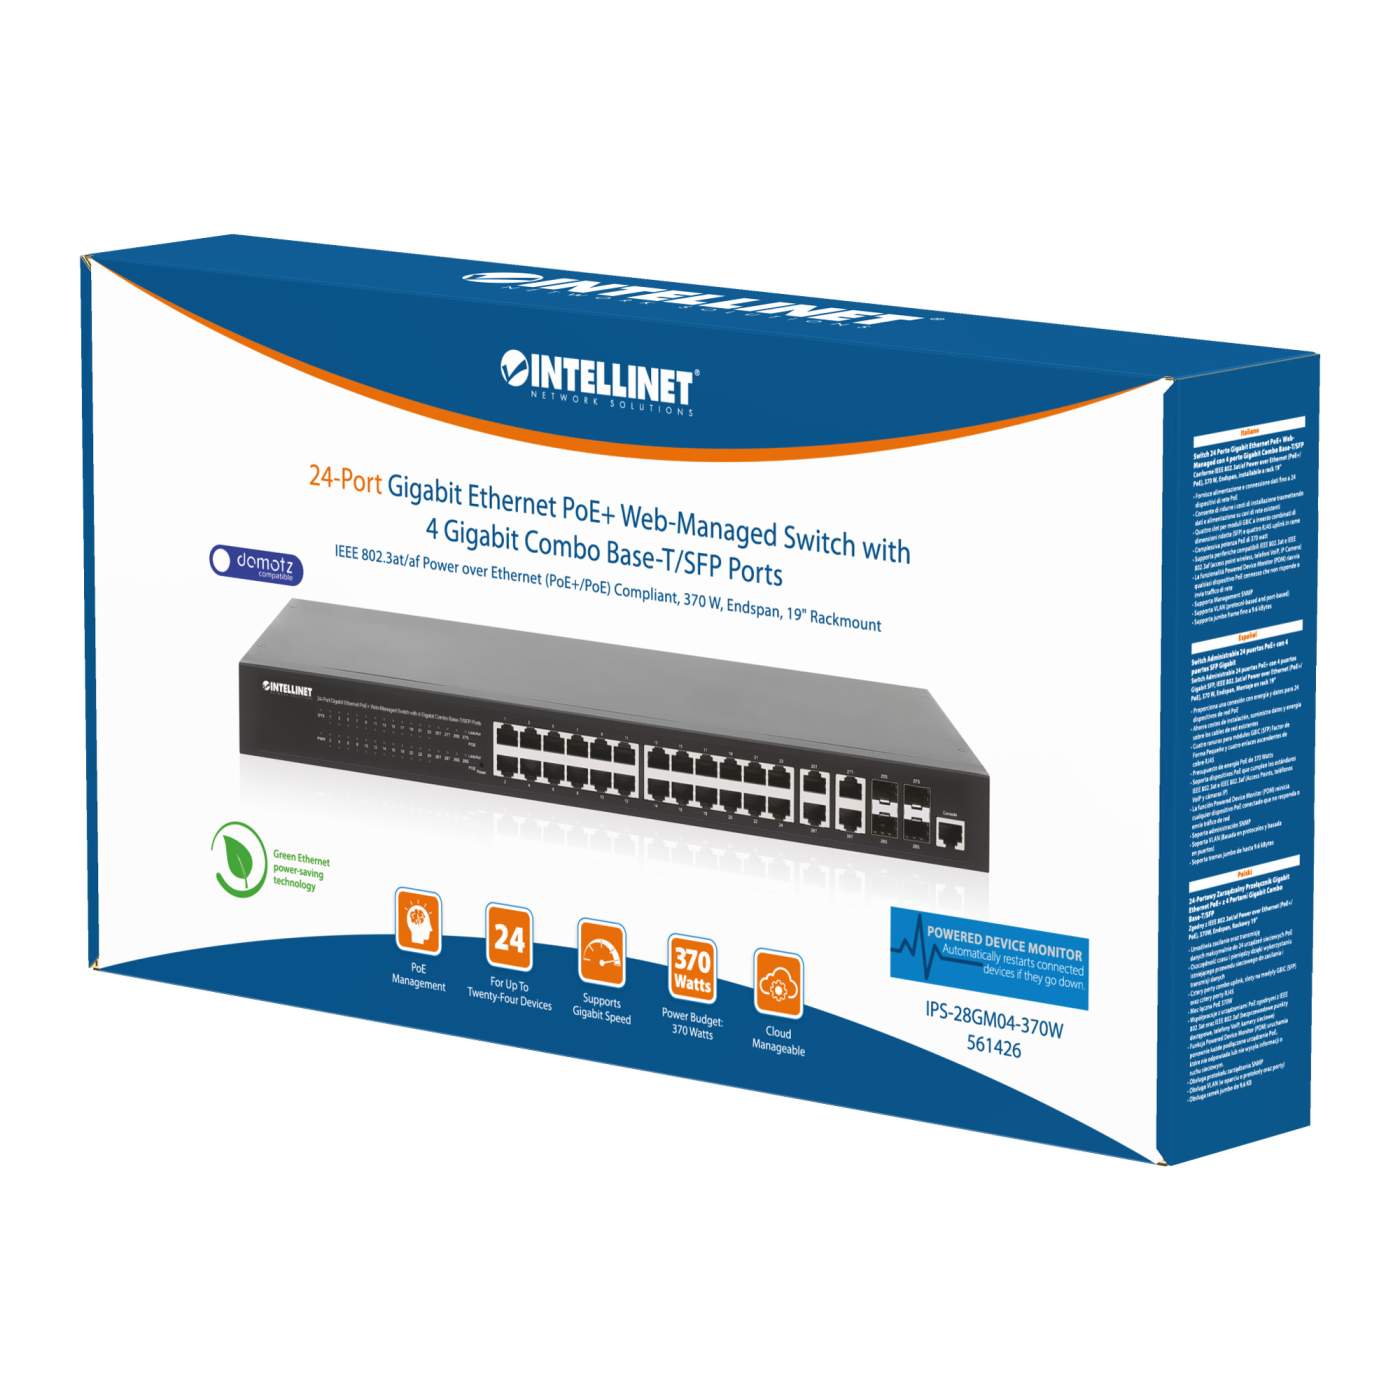 24-Port Gigabit Ethernet PoE+ Web-Managed Switch with 4 Gigabit Combo Base-T/SFP Ports Packaging Image 2